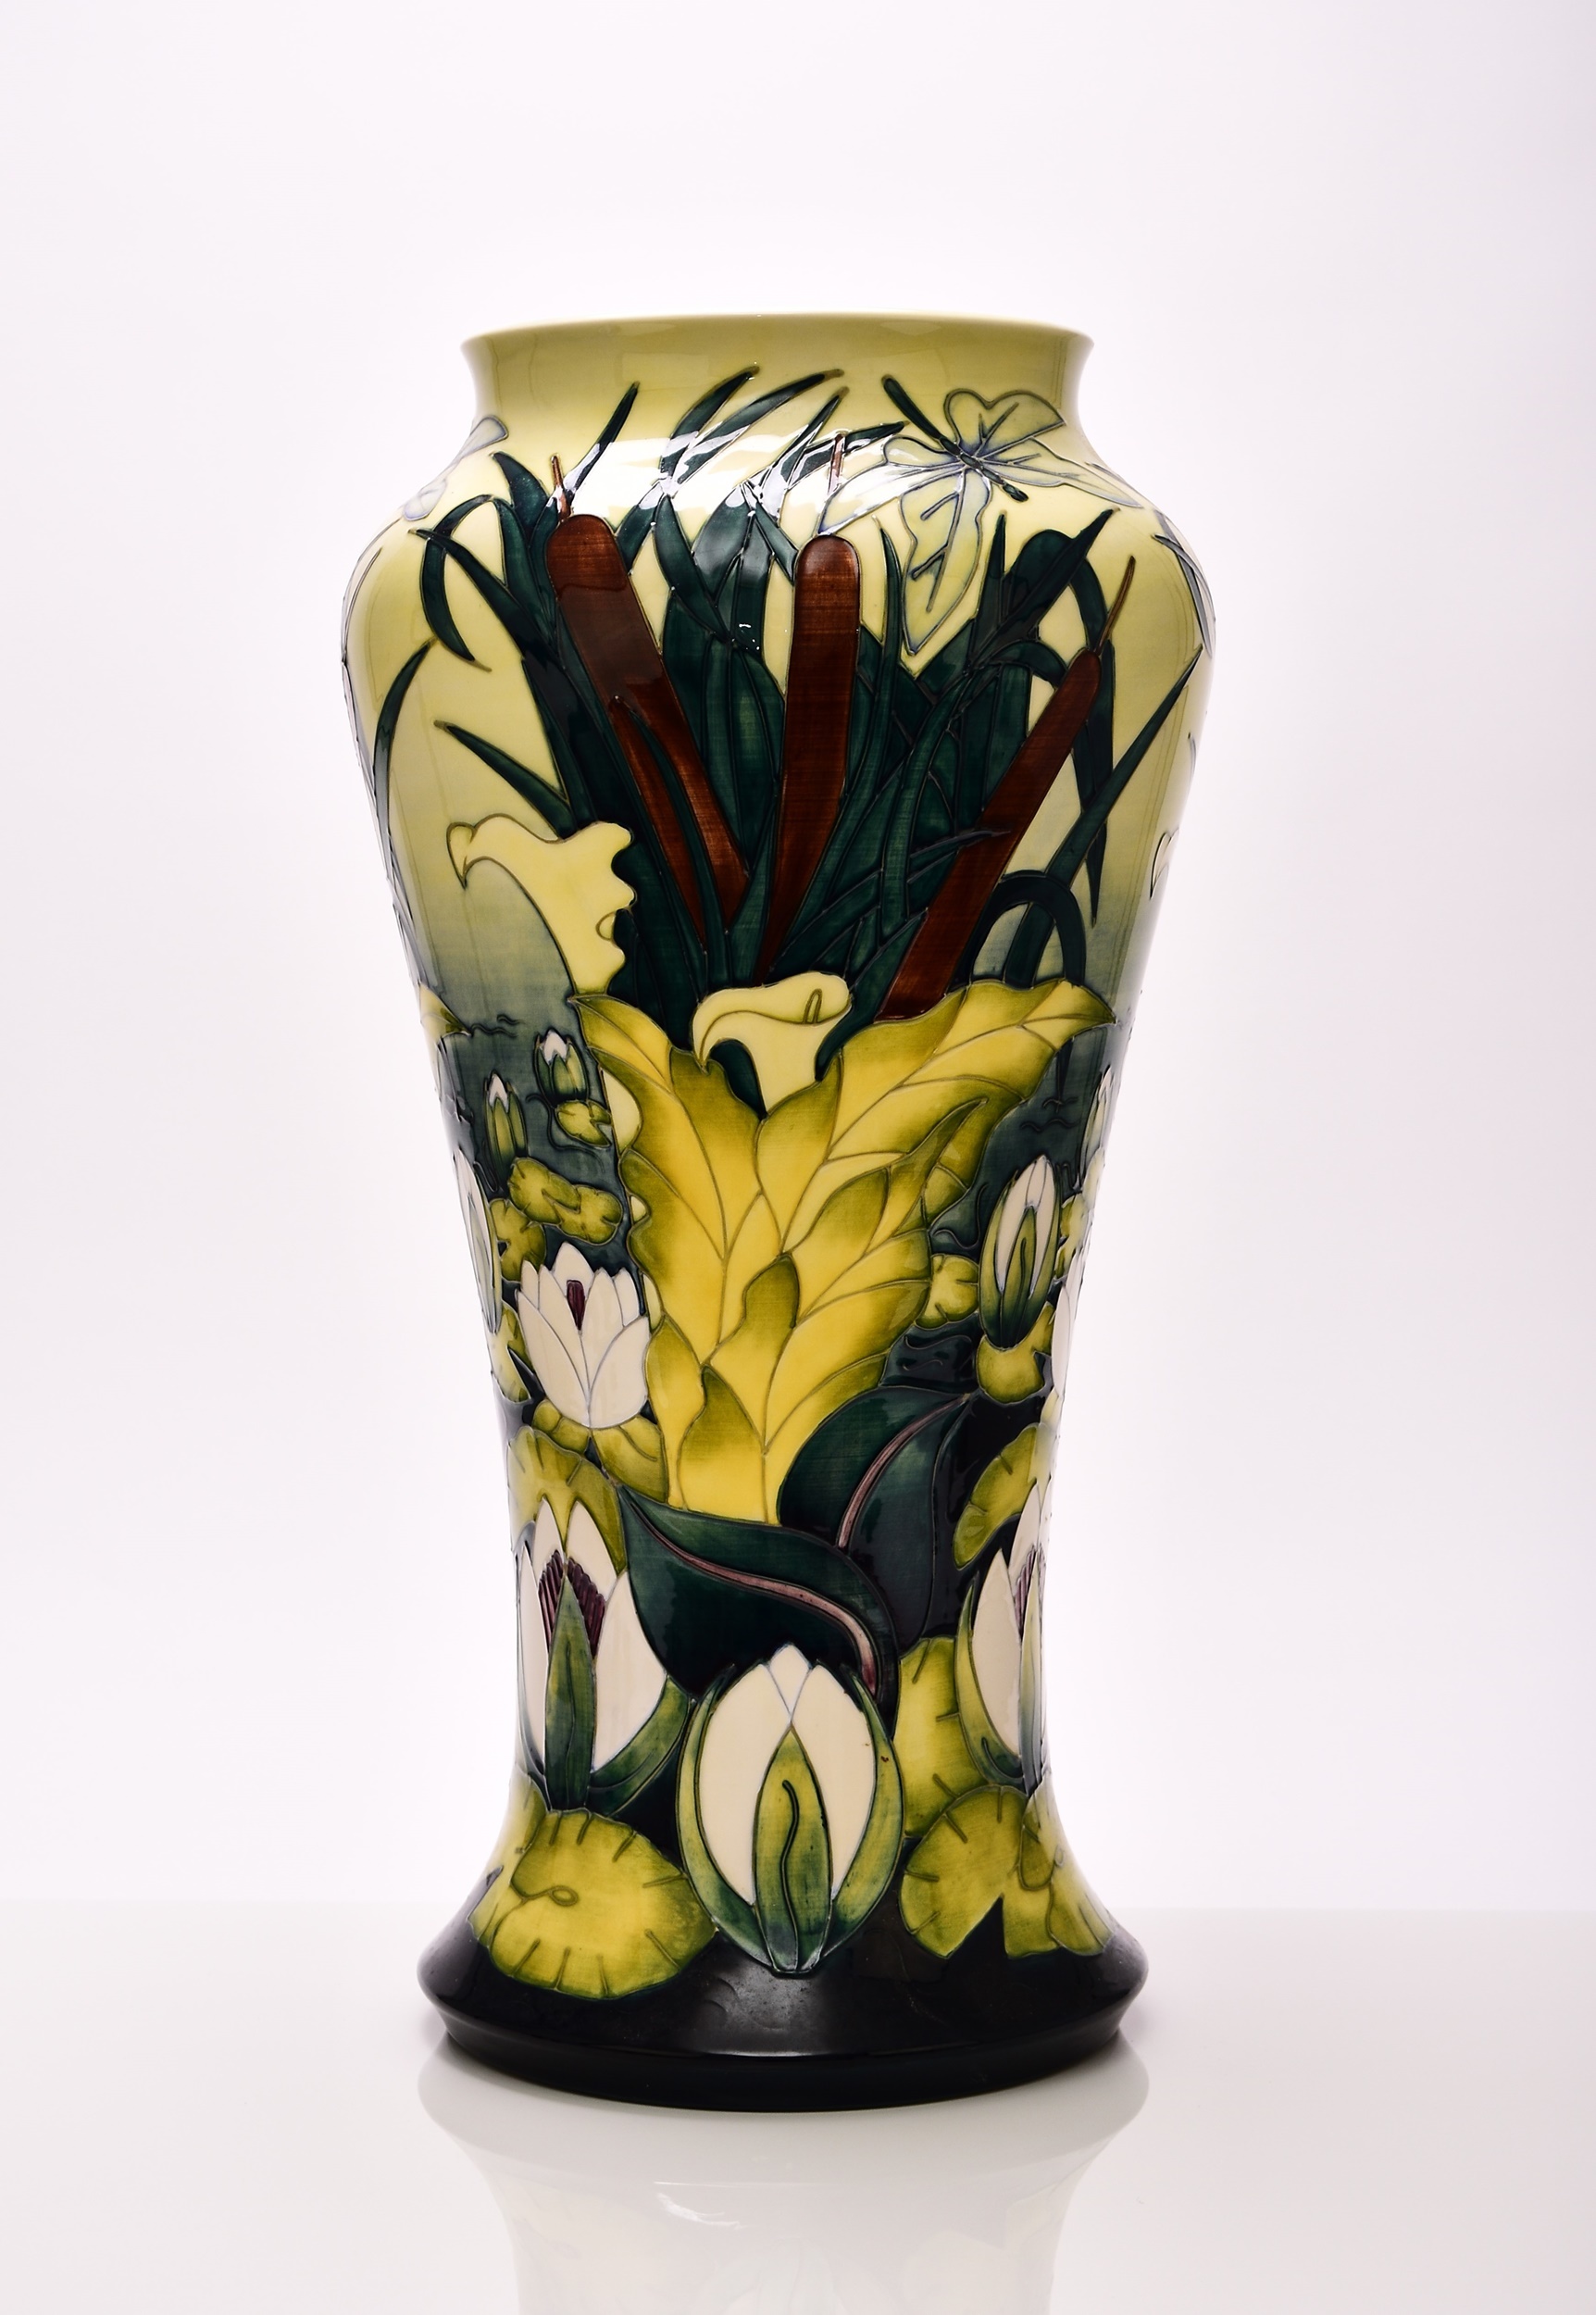 large floor-standing Moorcroft vase in the 'Lamia' pattern